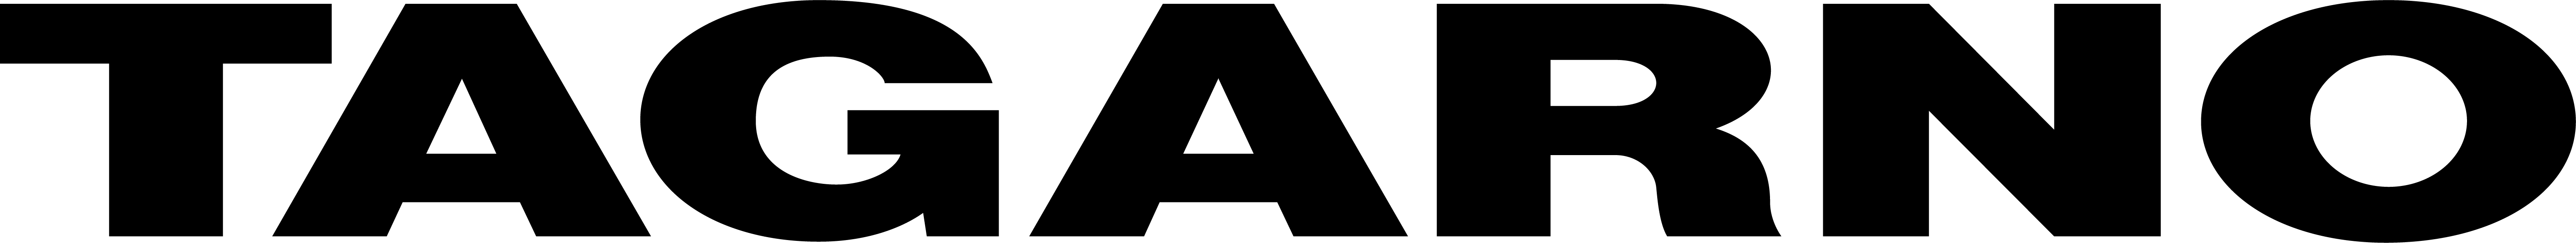 TAGARNO logo black-2